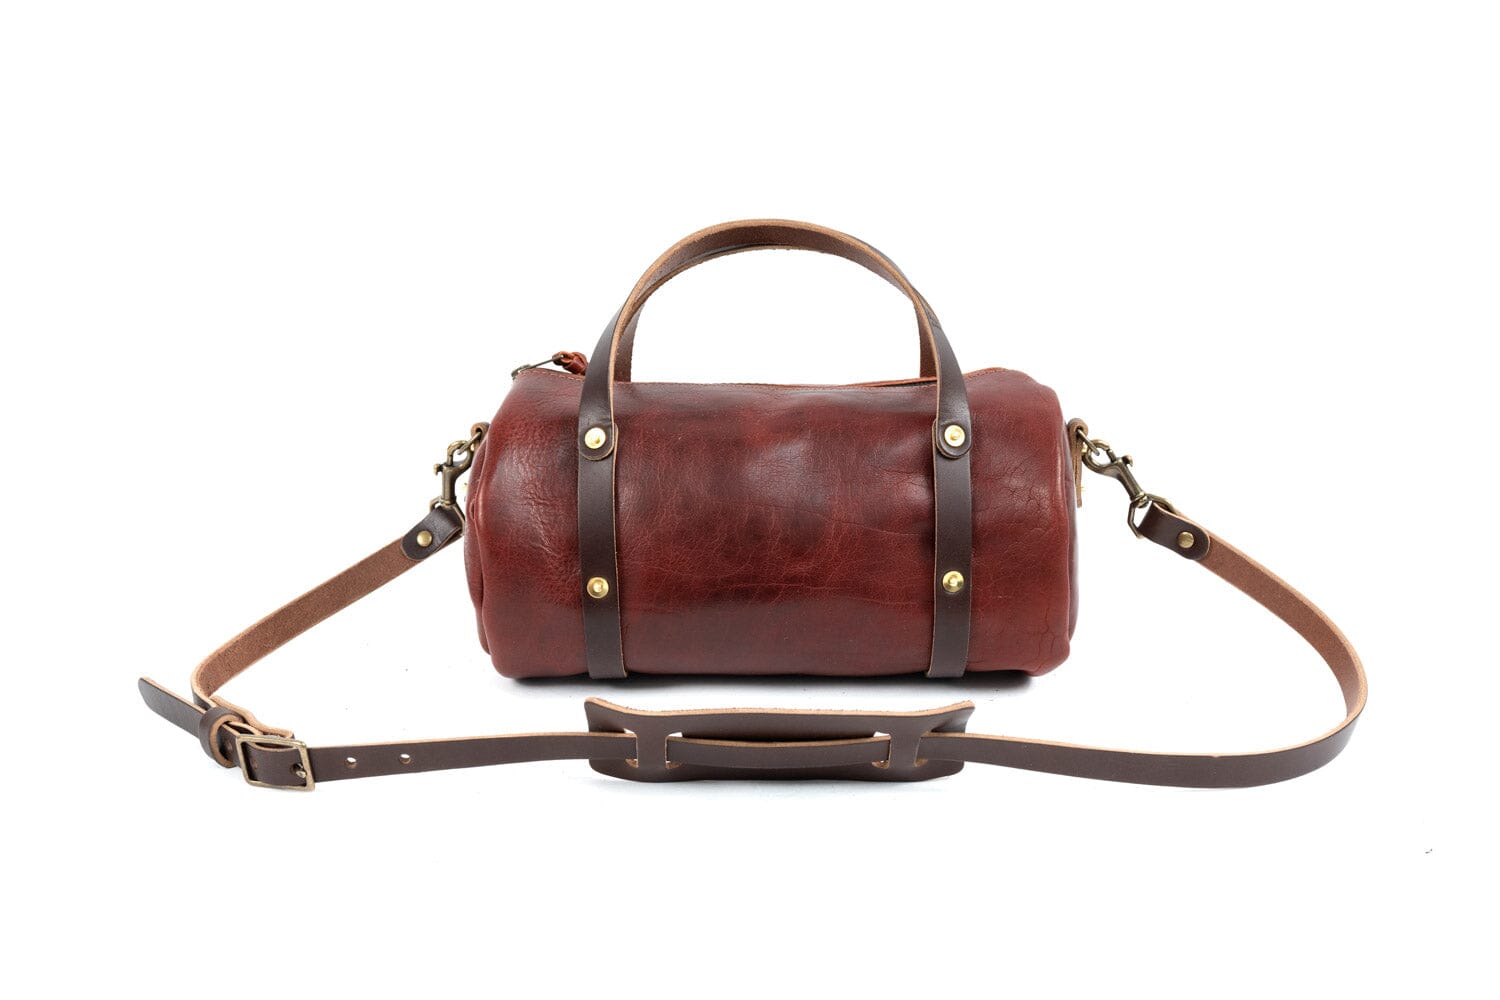 Go Forth Goods Leather Tassel Bag Charm Redwood Bison (Limited Edition)